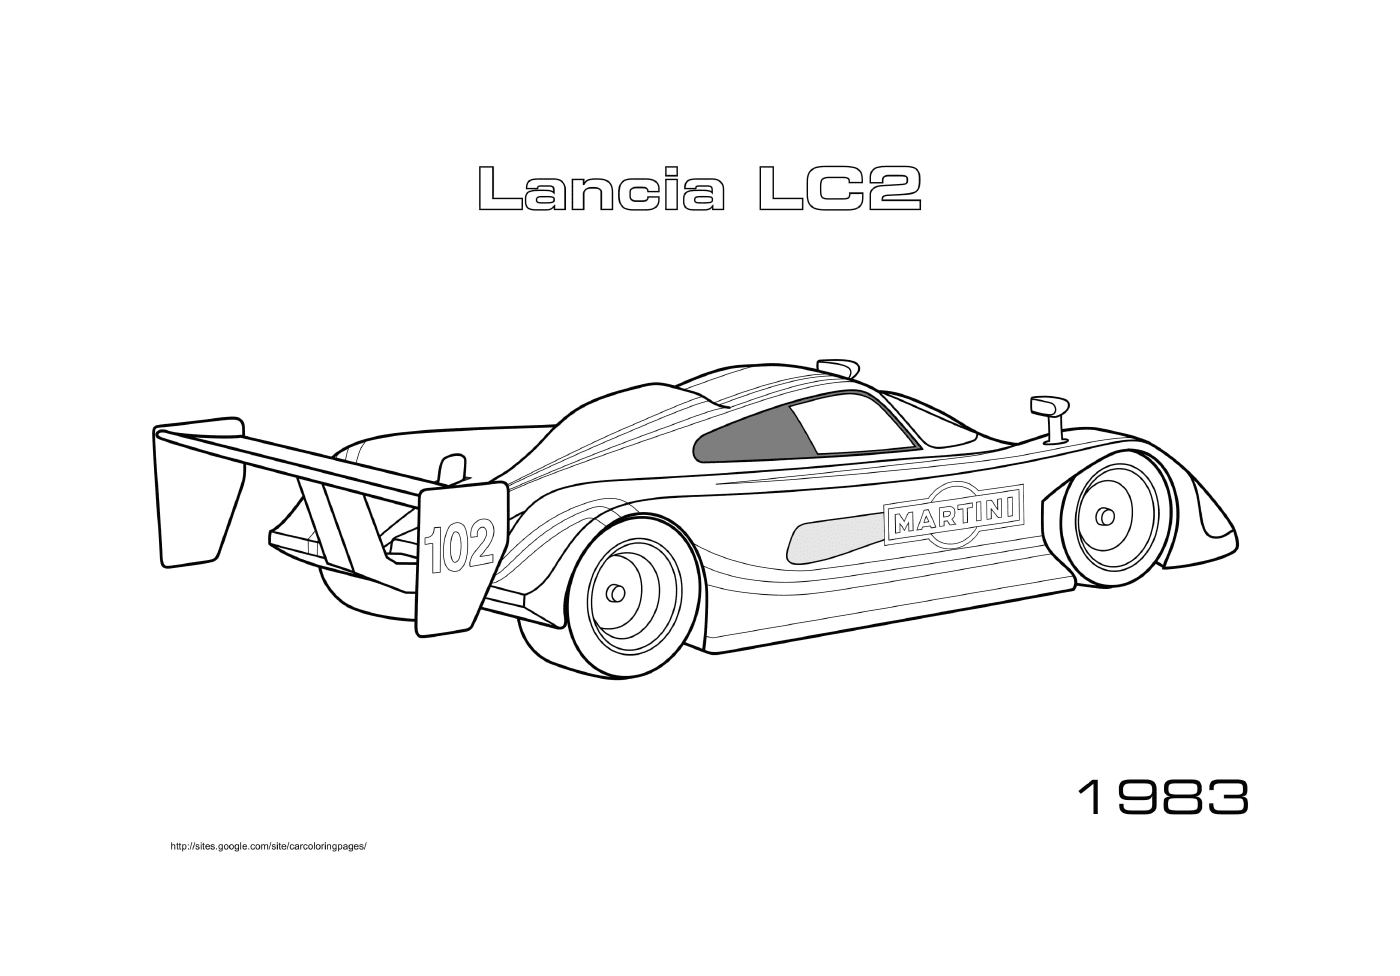  Lancia Lc2 of 1983 